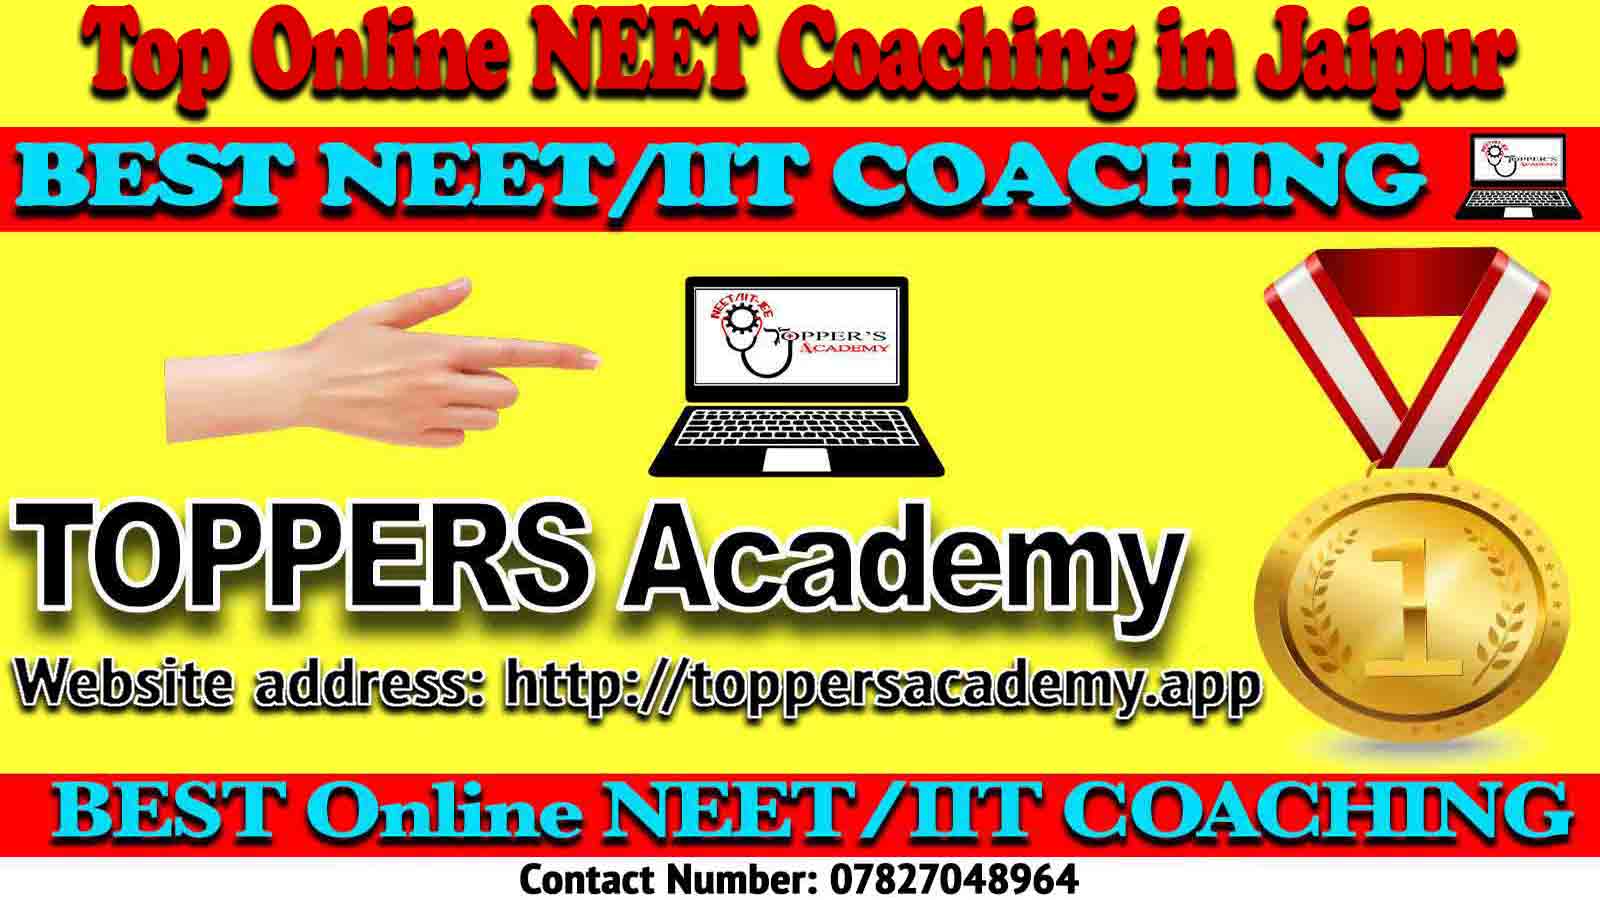 Best Online NEET Coaching in Jaipur